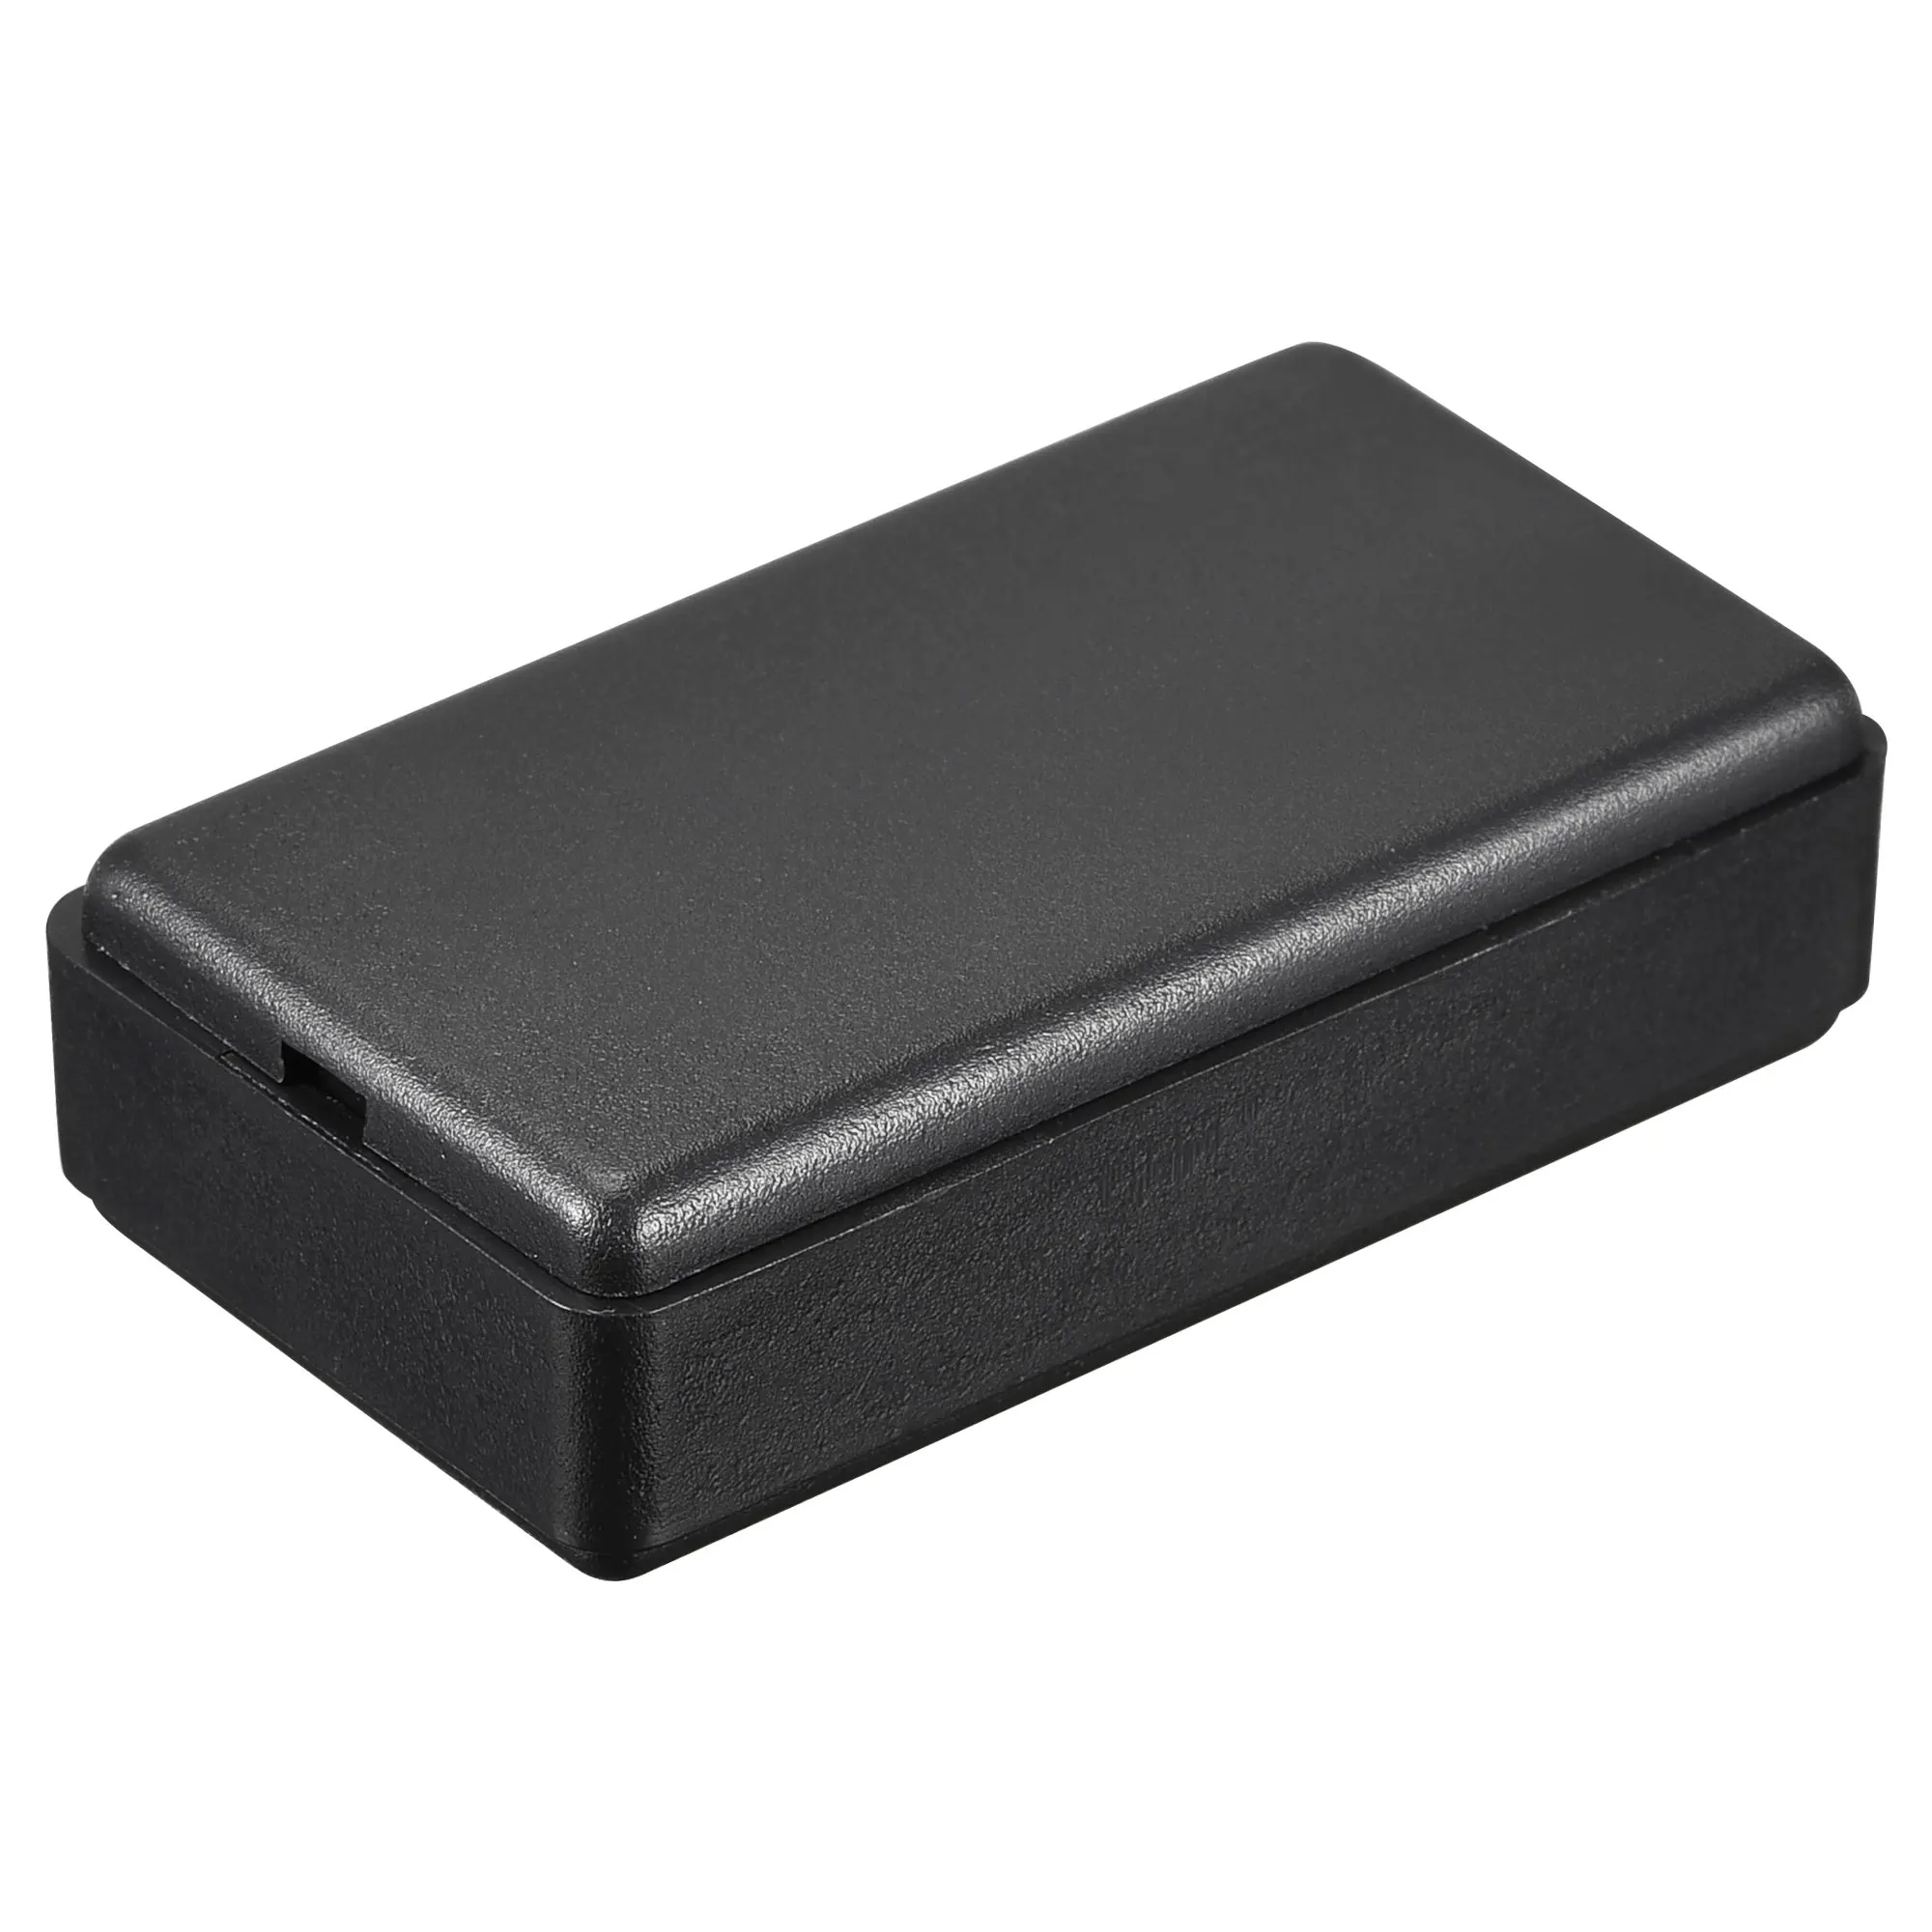 5pcs 50x28x15mm Mini Dustproof ABS Plastic Project Box Junction Box Housing Instrument Case Enclosure Box Electronic Supplies